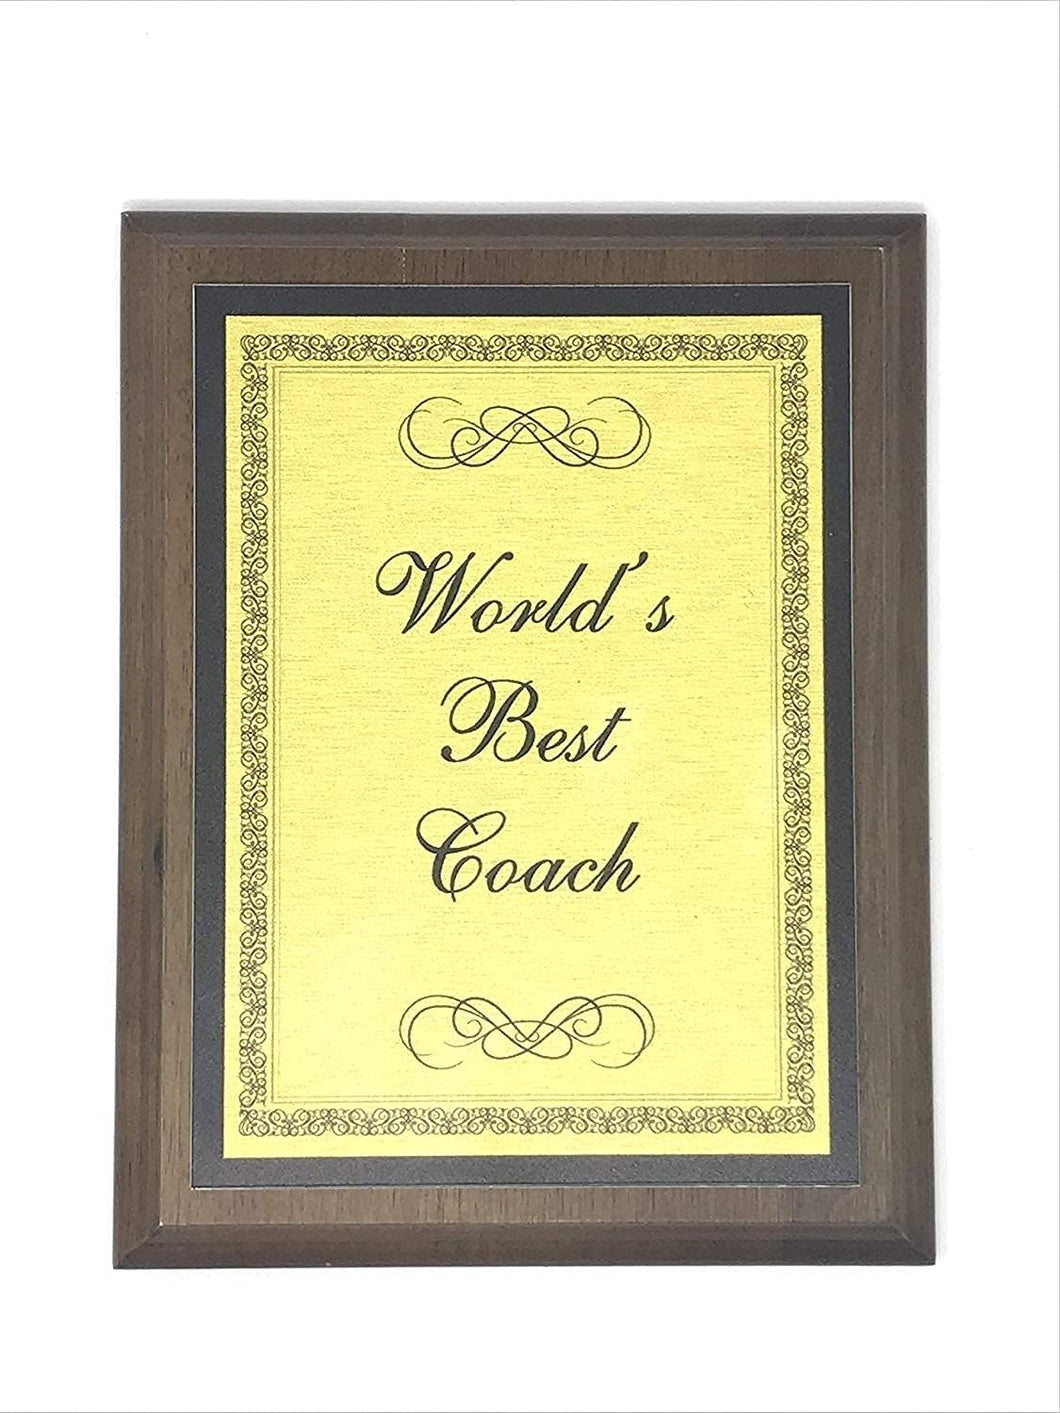 (World's Best Coach, Gold Plaques)